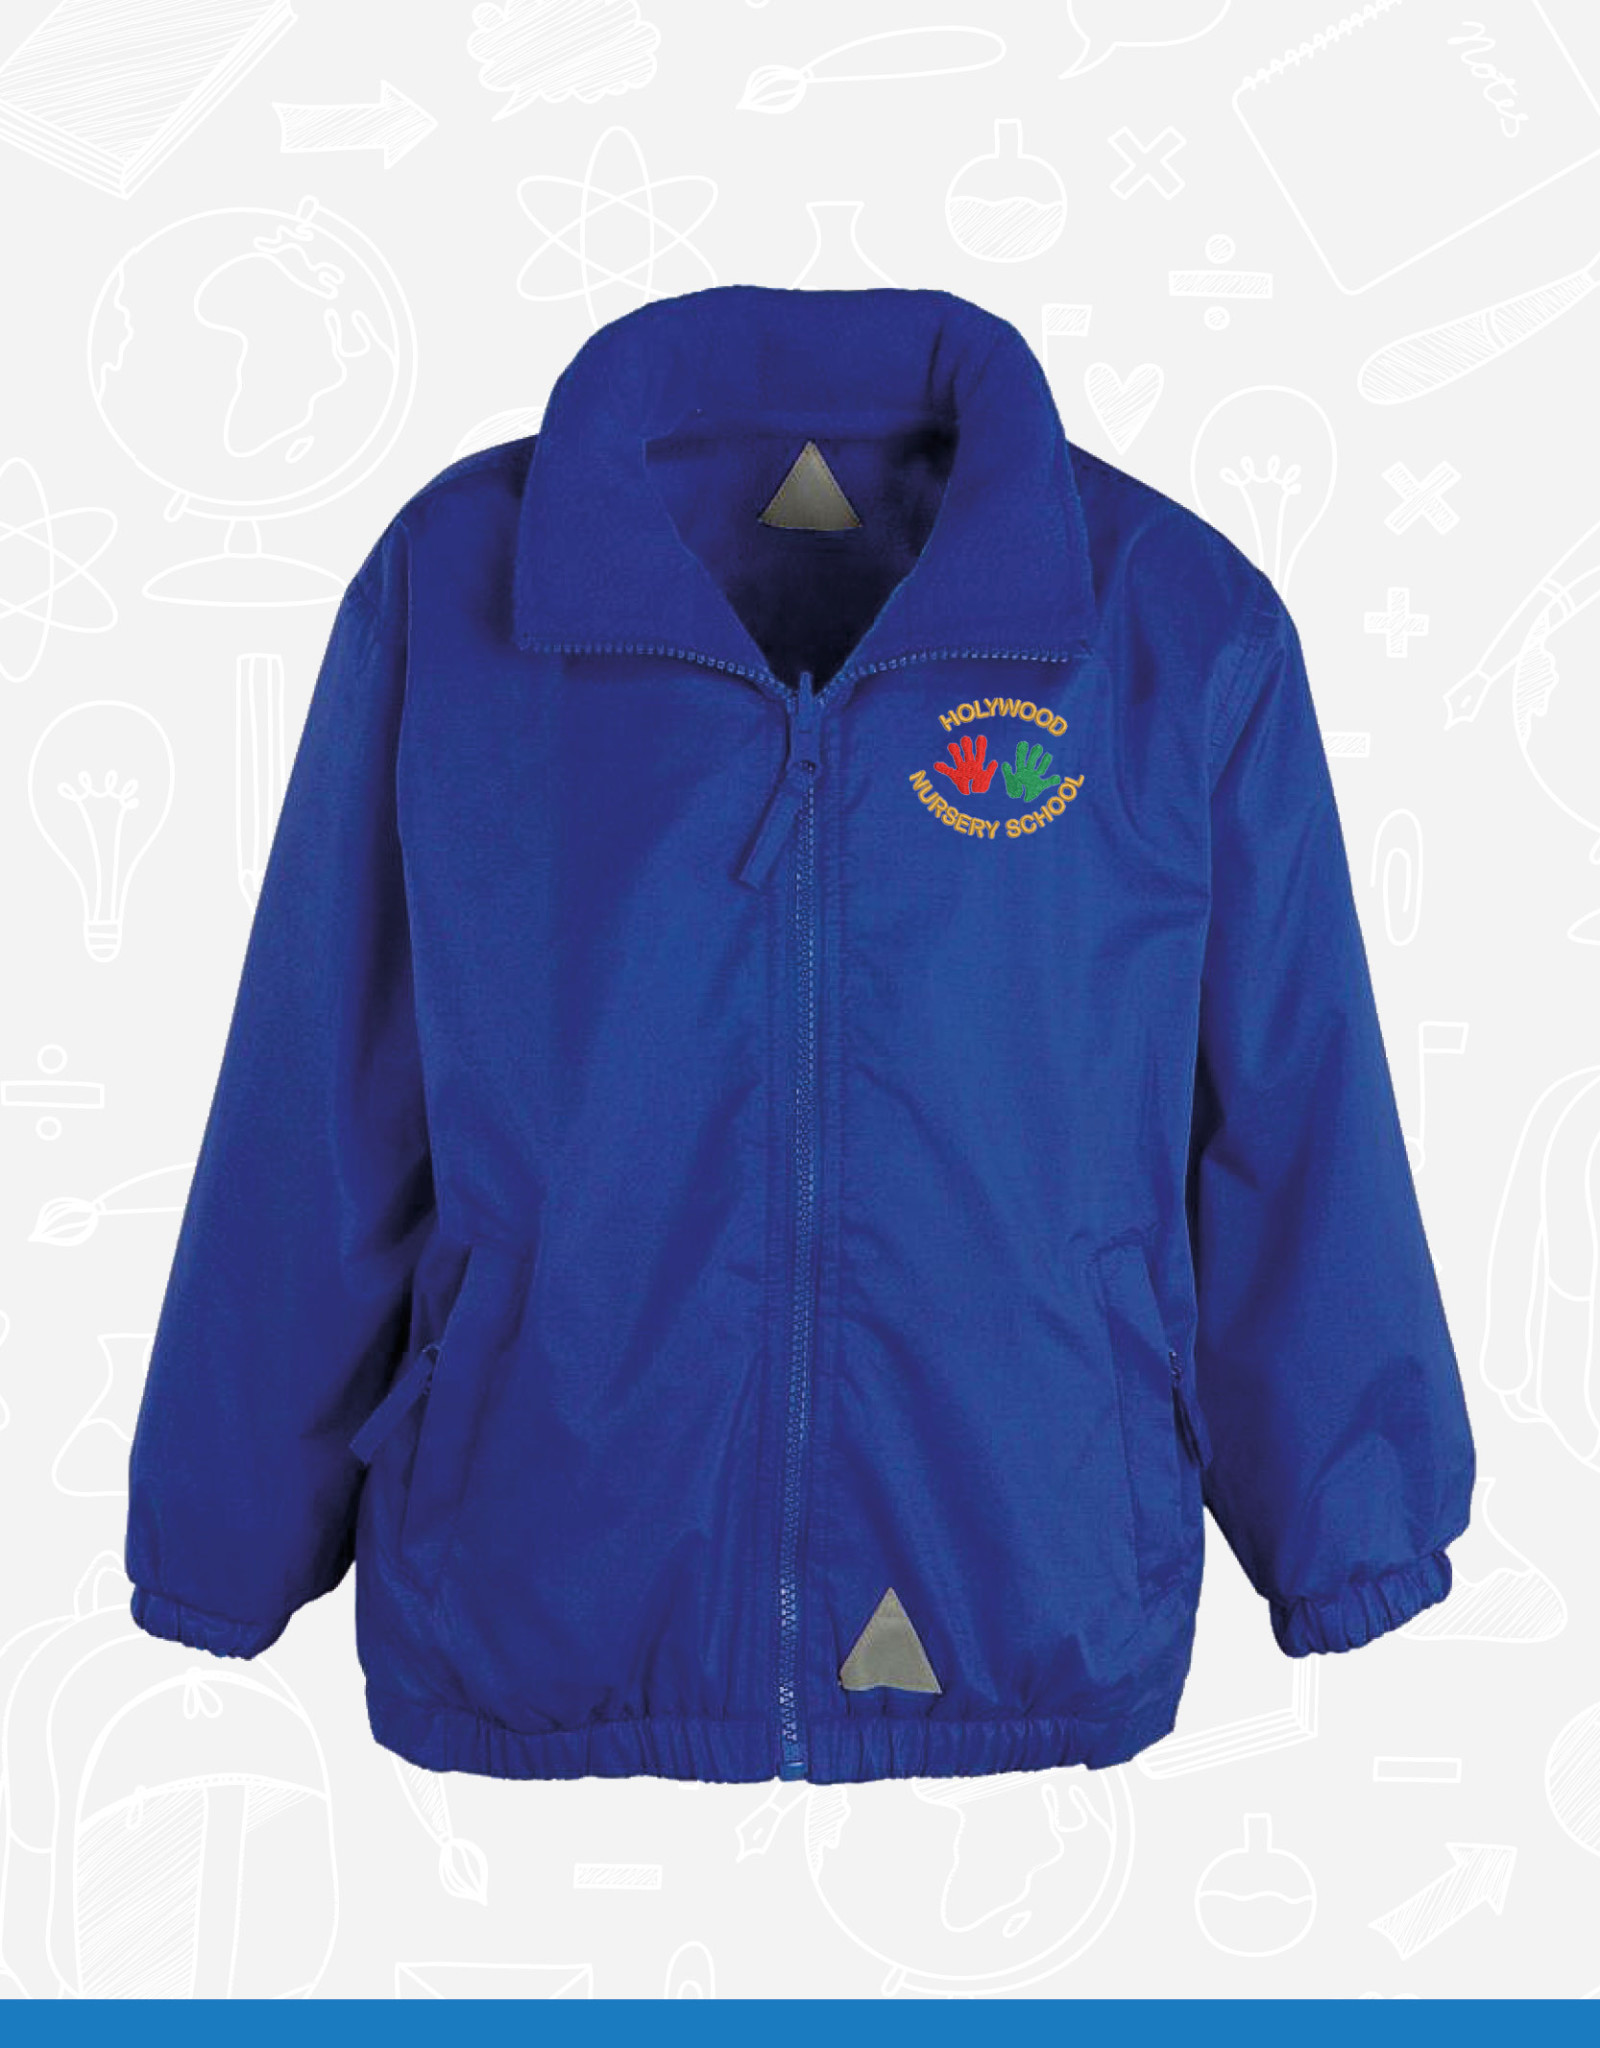 Banner Holywood Nursery Mistral Jacket (3JM)